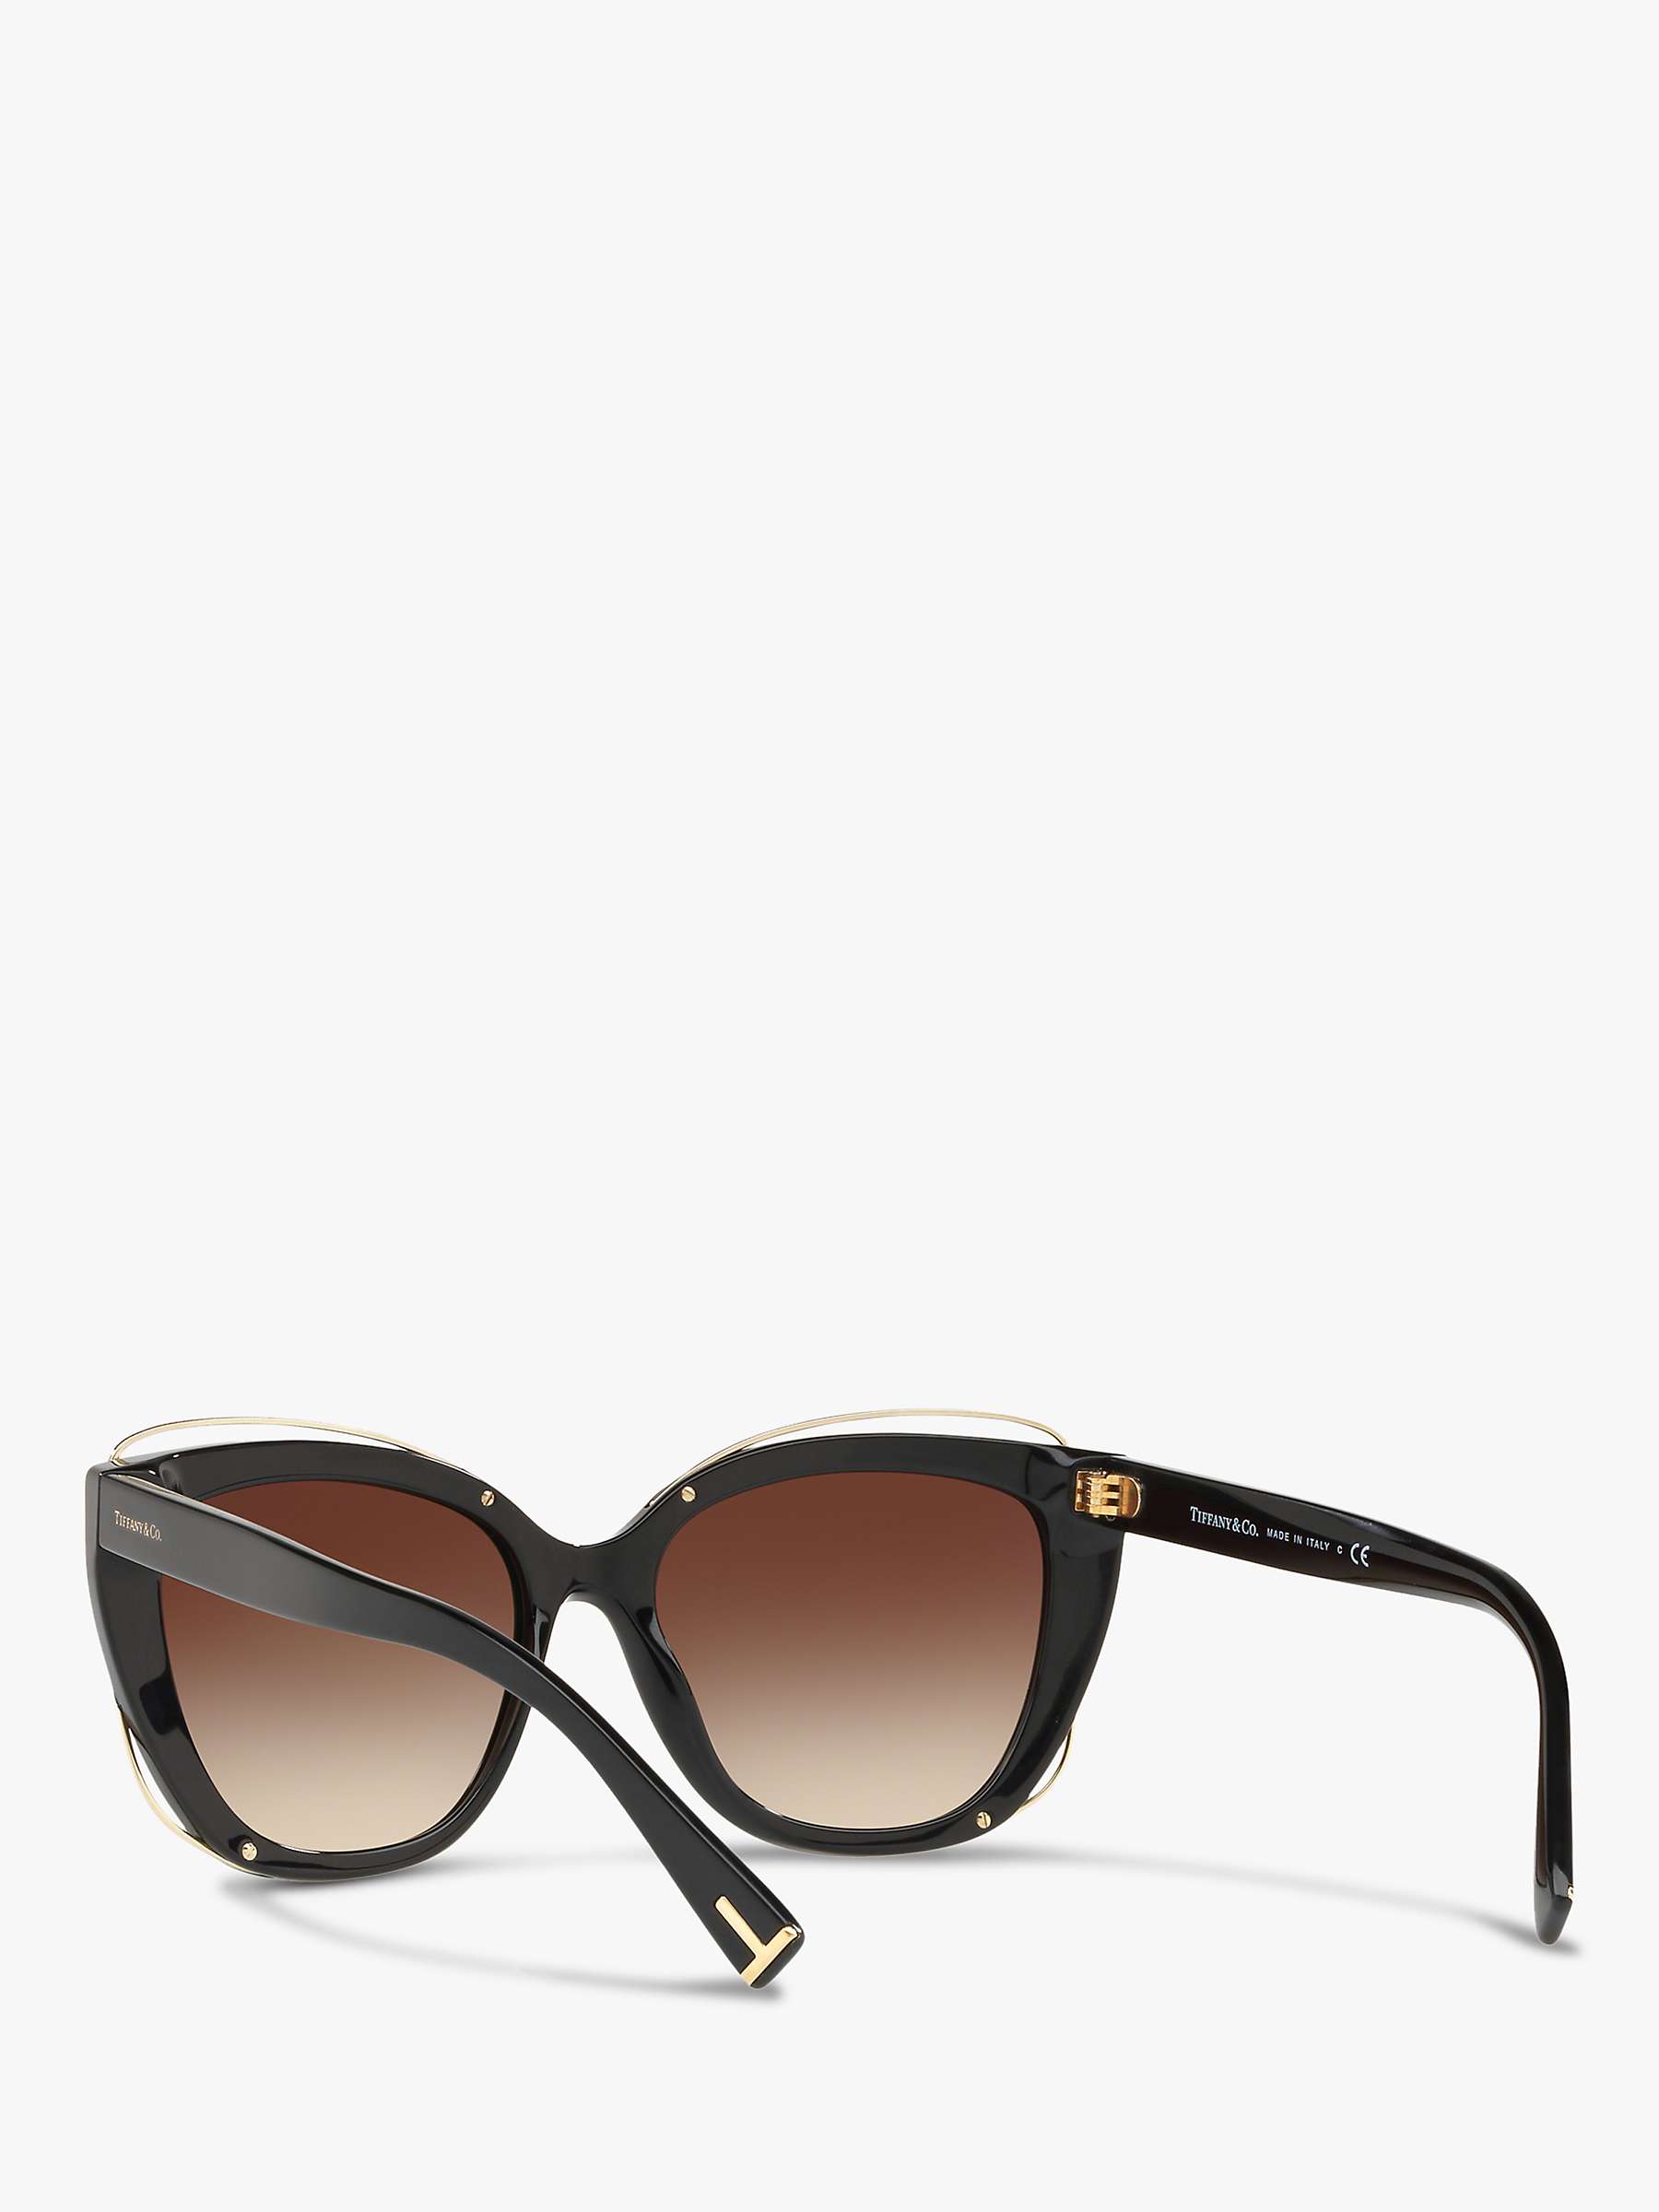 Buy Tiffany & Co TF4148 Women's Cat's Eye Sunglasses, Black/Brown Online at johnlewis.com